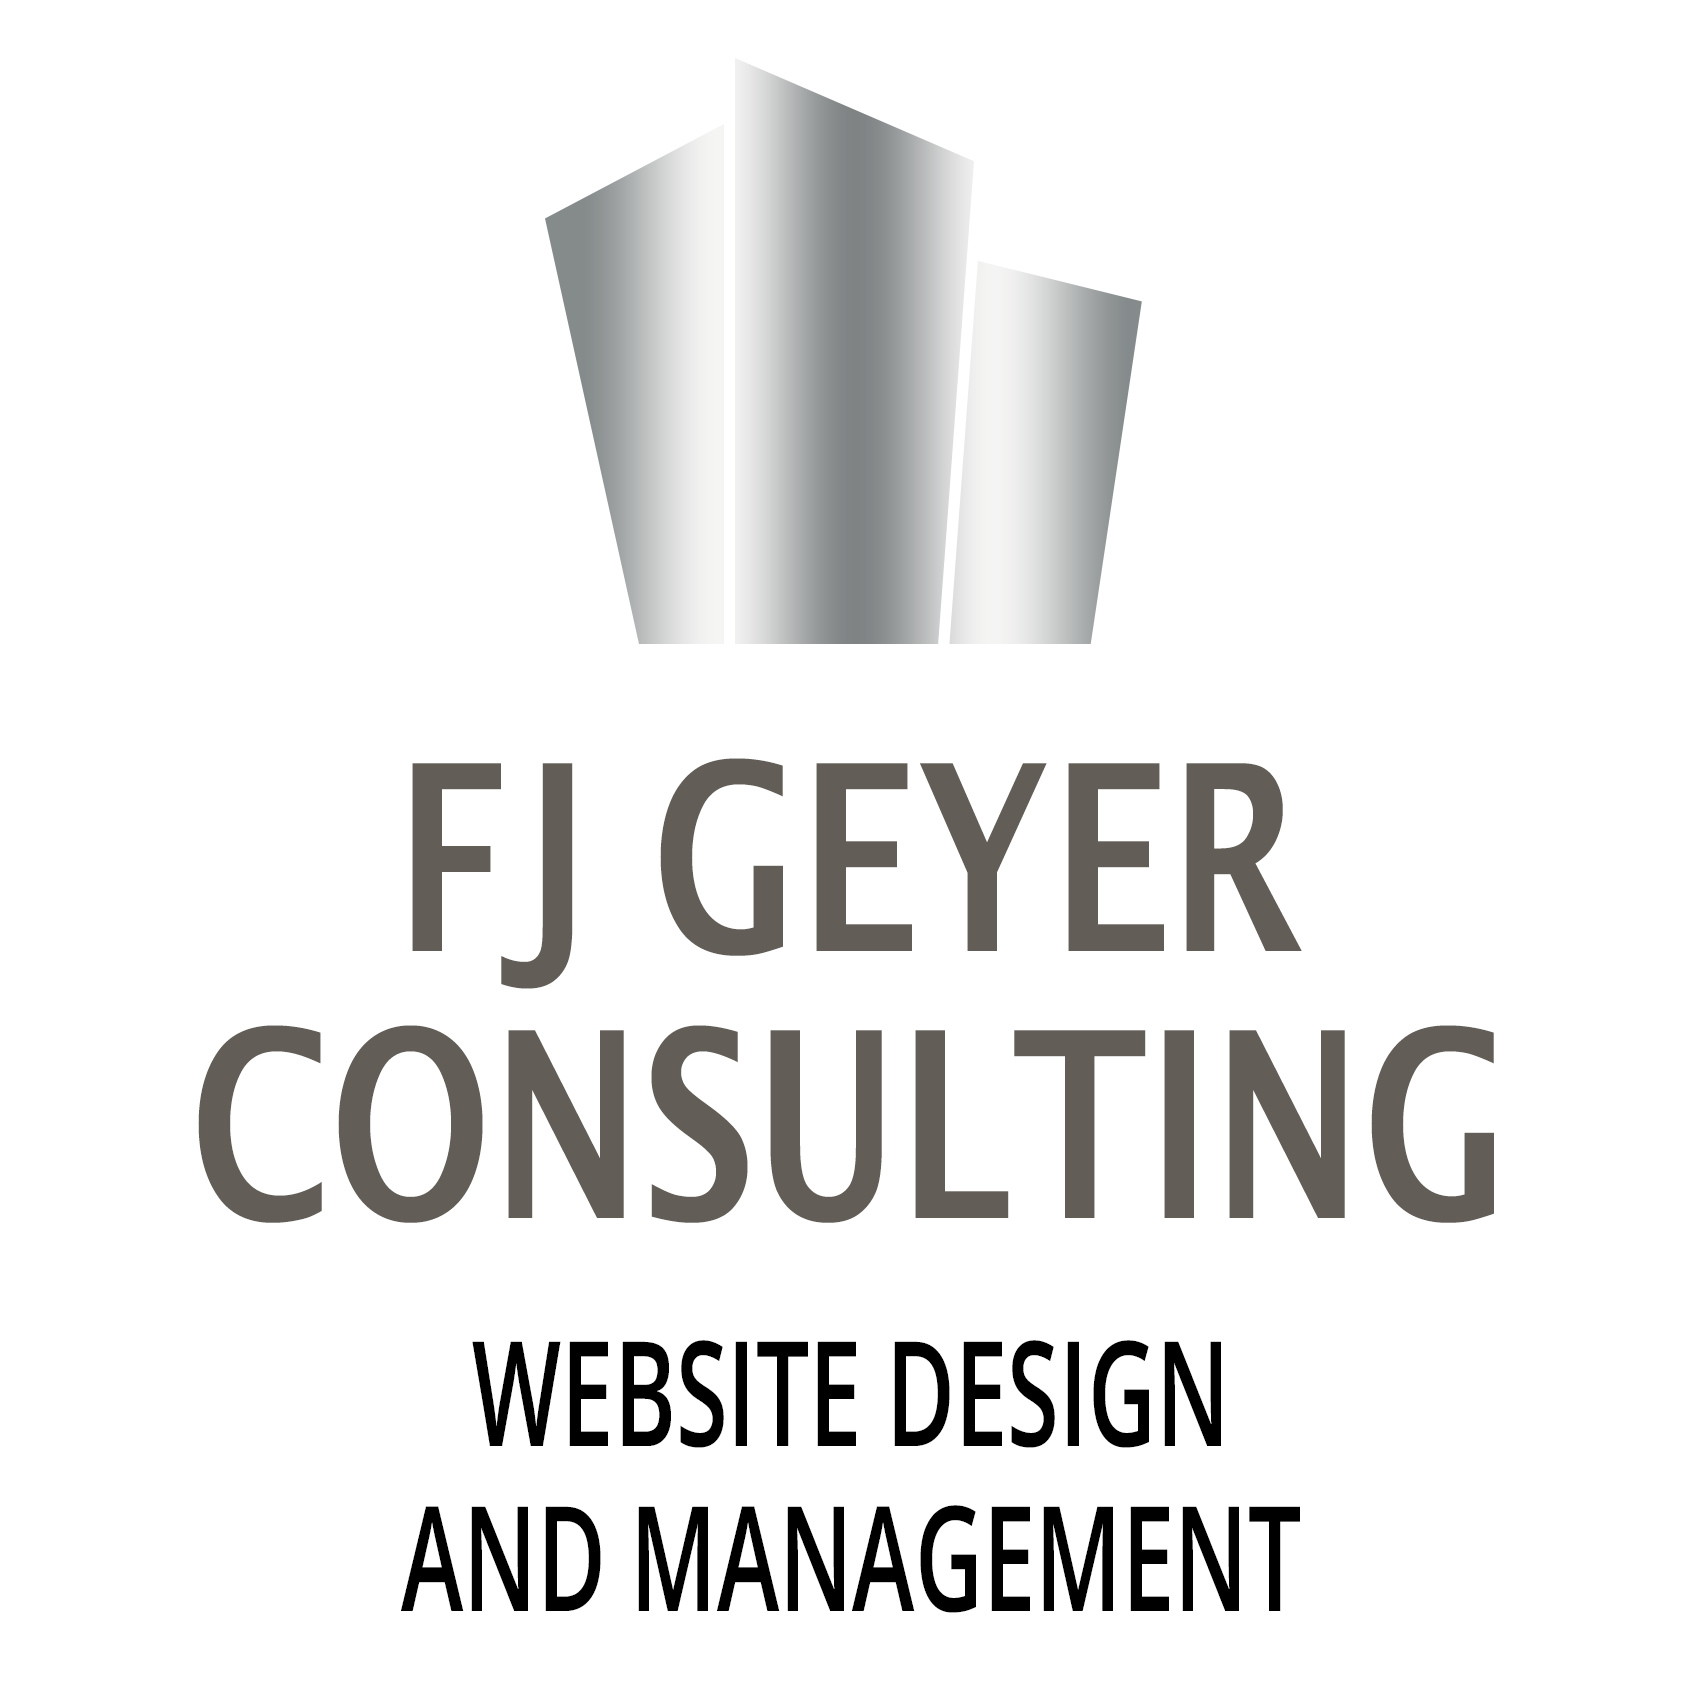 FJ Geyer Consulting